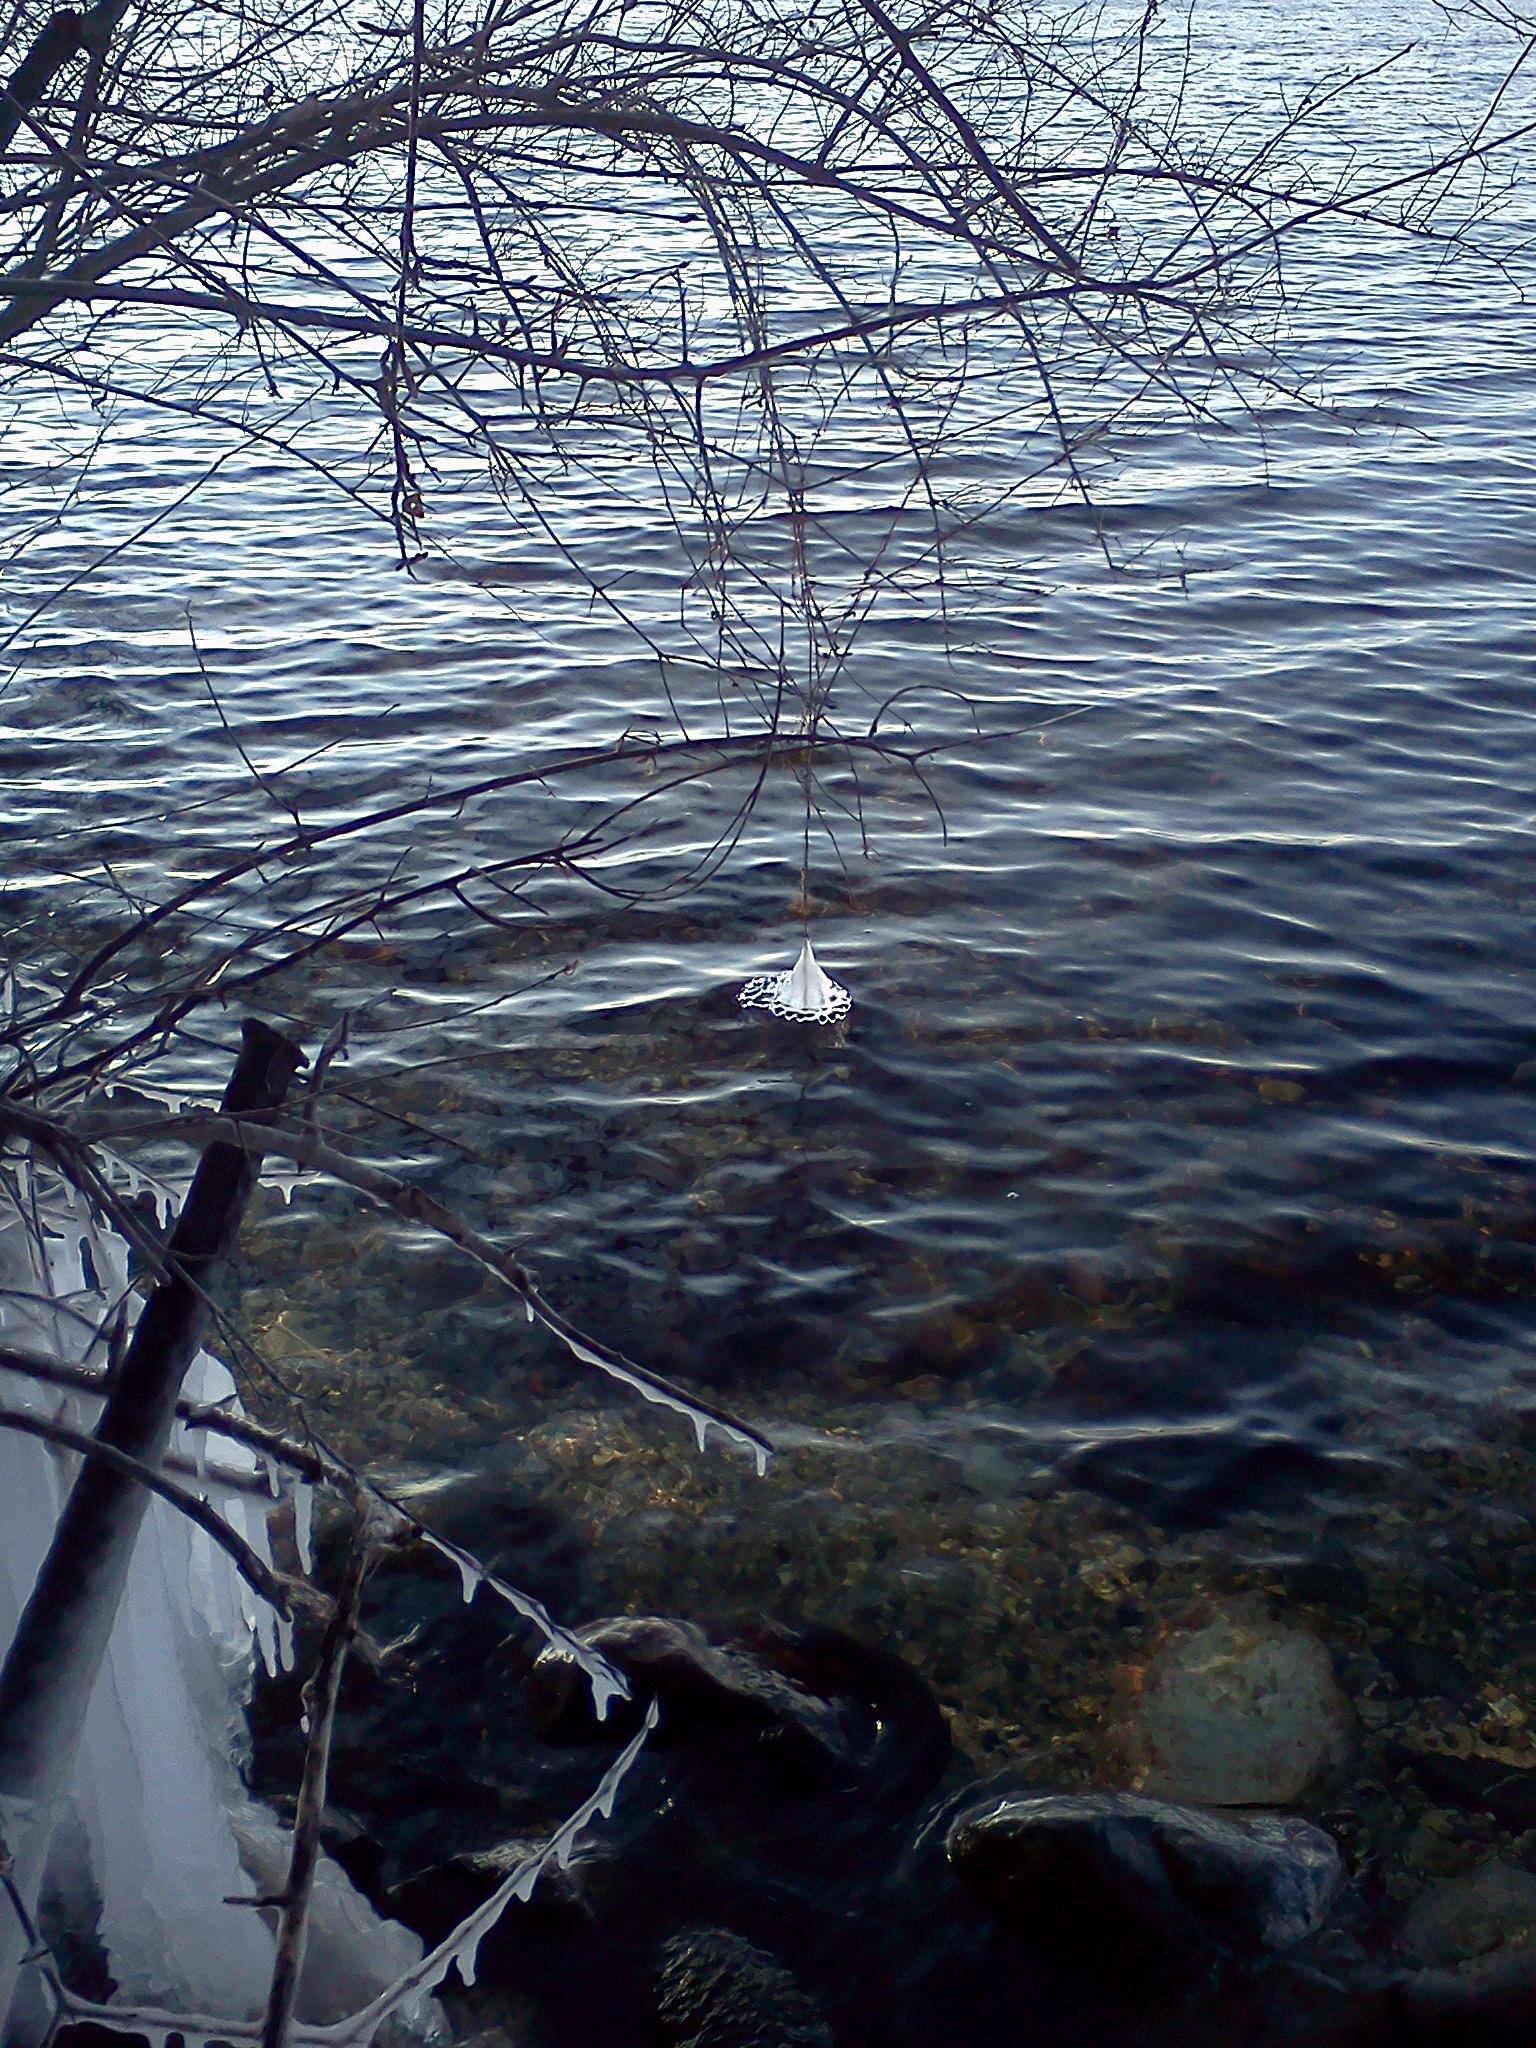 City of Lake Geneva Public Beach, Geneva Lake, White River and Nippersink Creek Watershed (FX03)